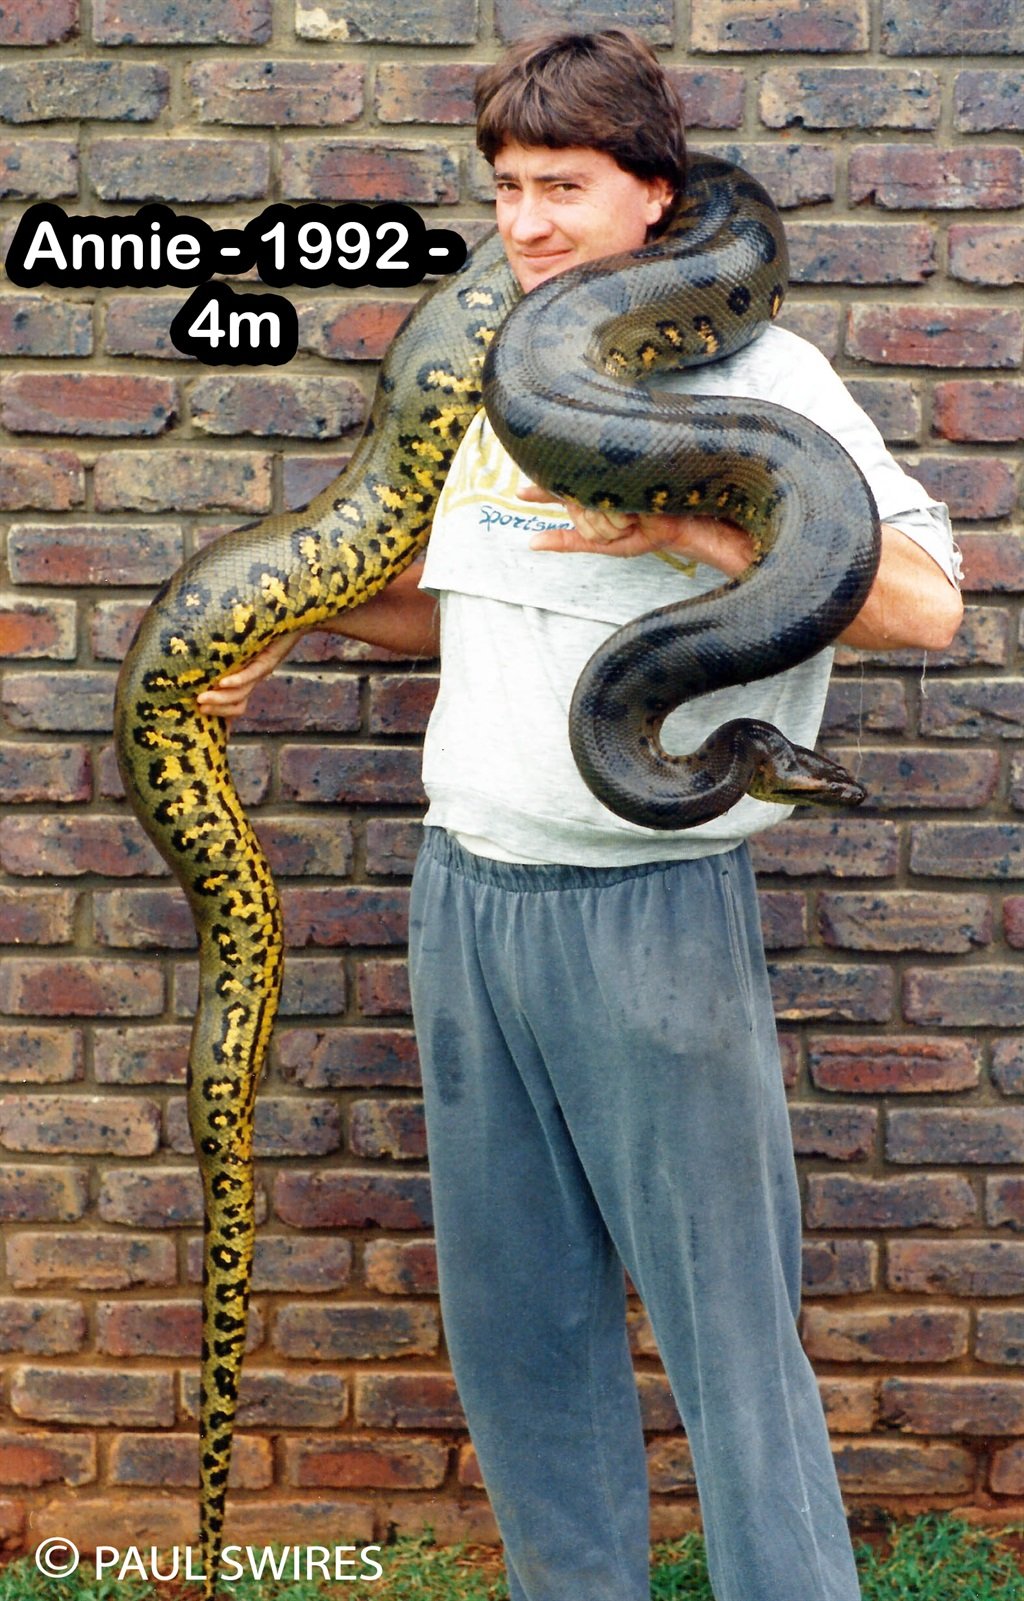 Annie the anaconda weighs over 40kg